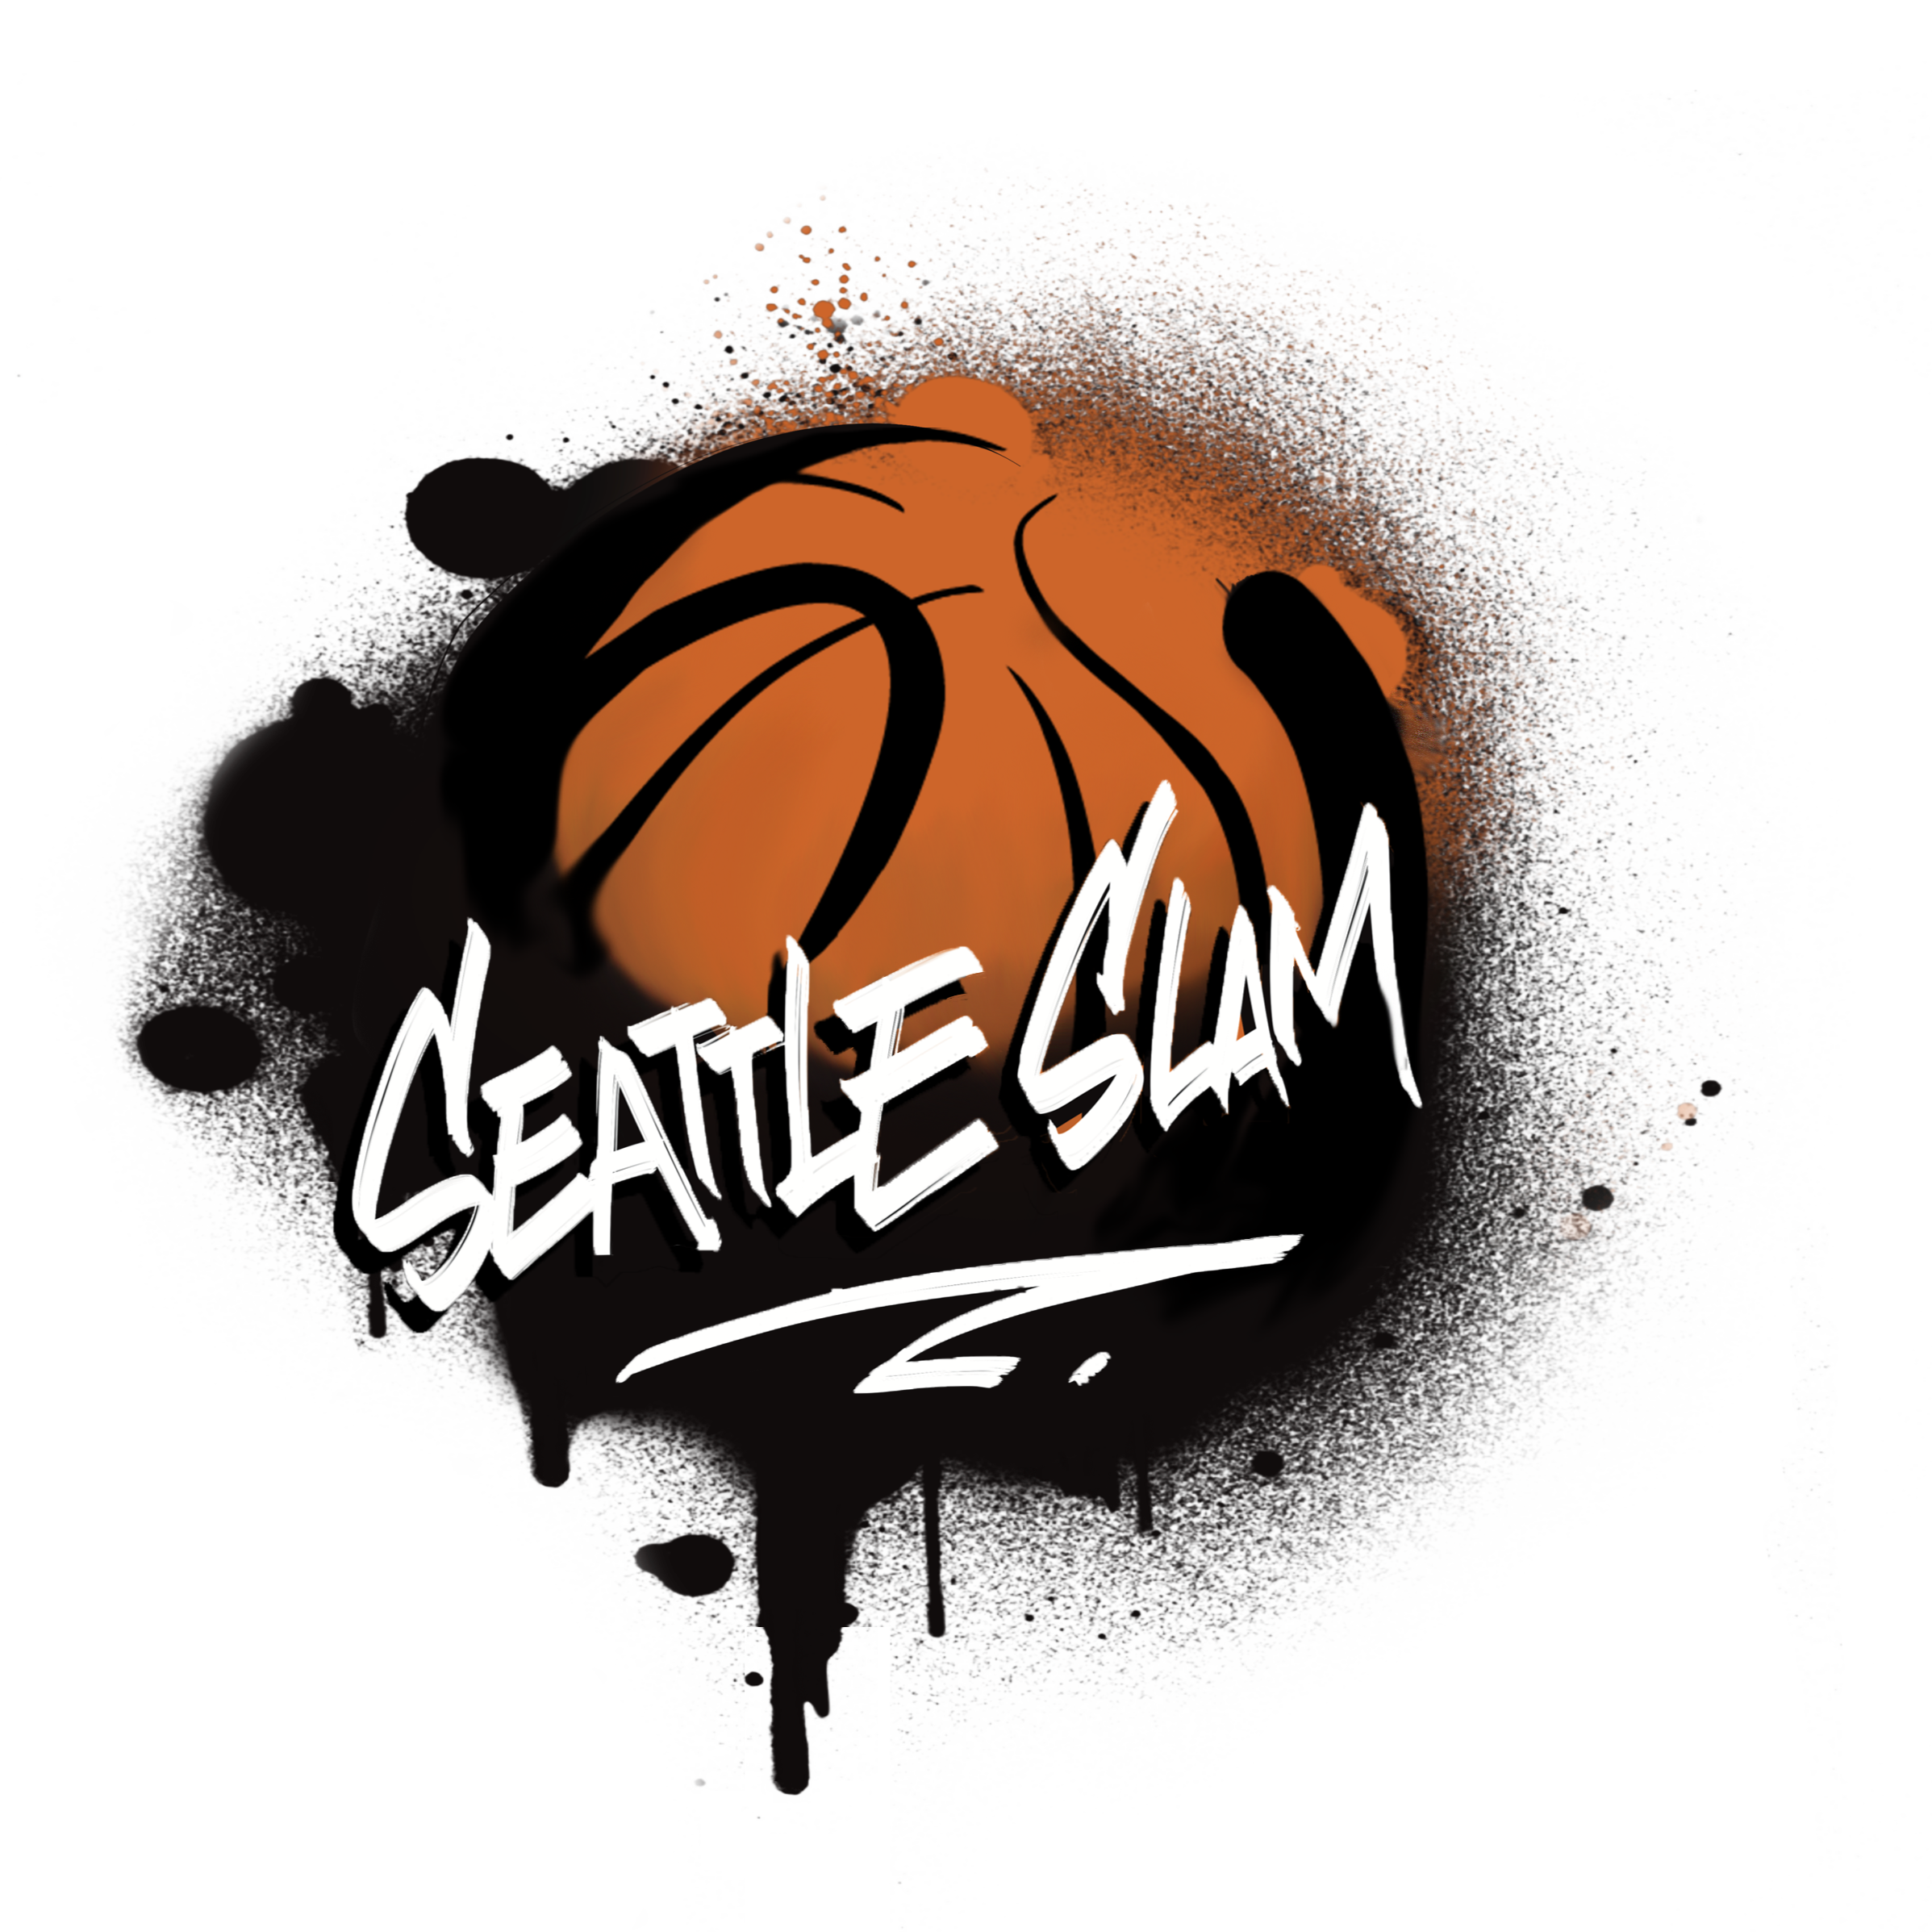 Seattle_Slam_Logo_UPDATE2B_1.png